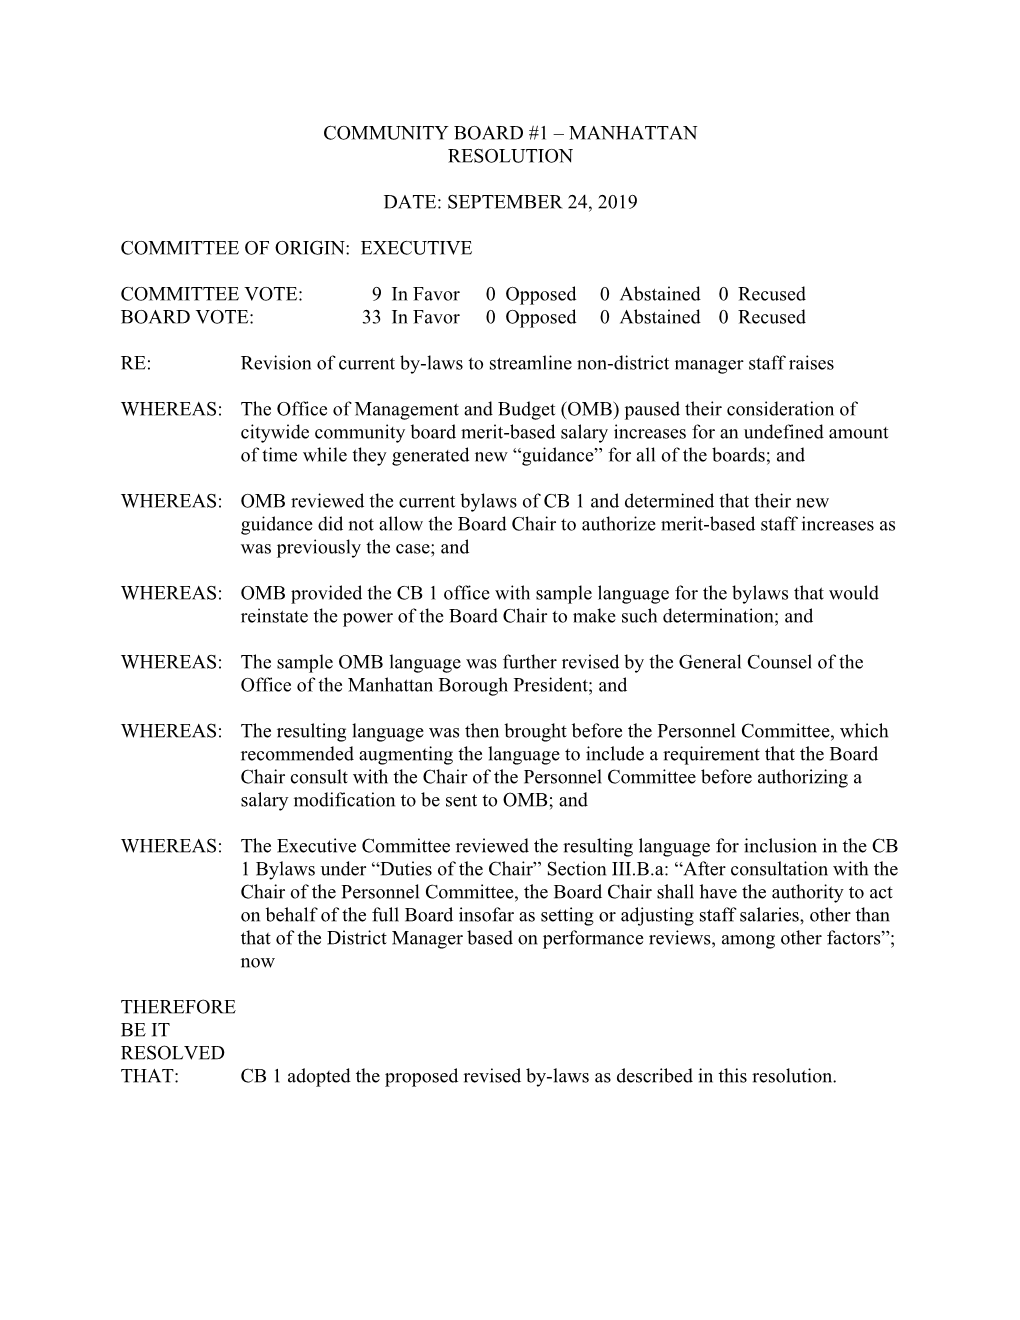 Community Board #1 – Manhattan Resolution